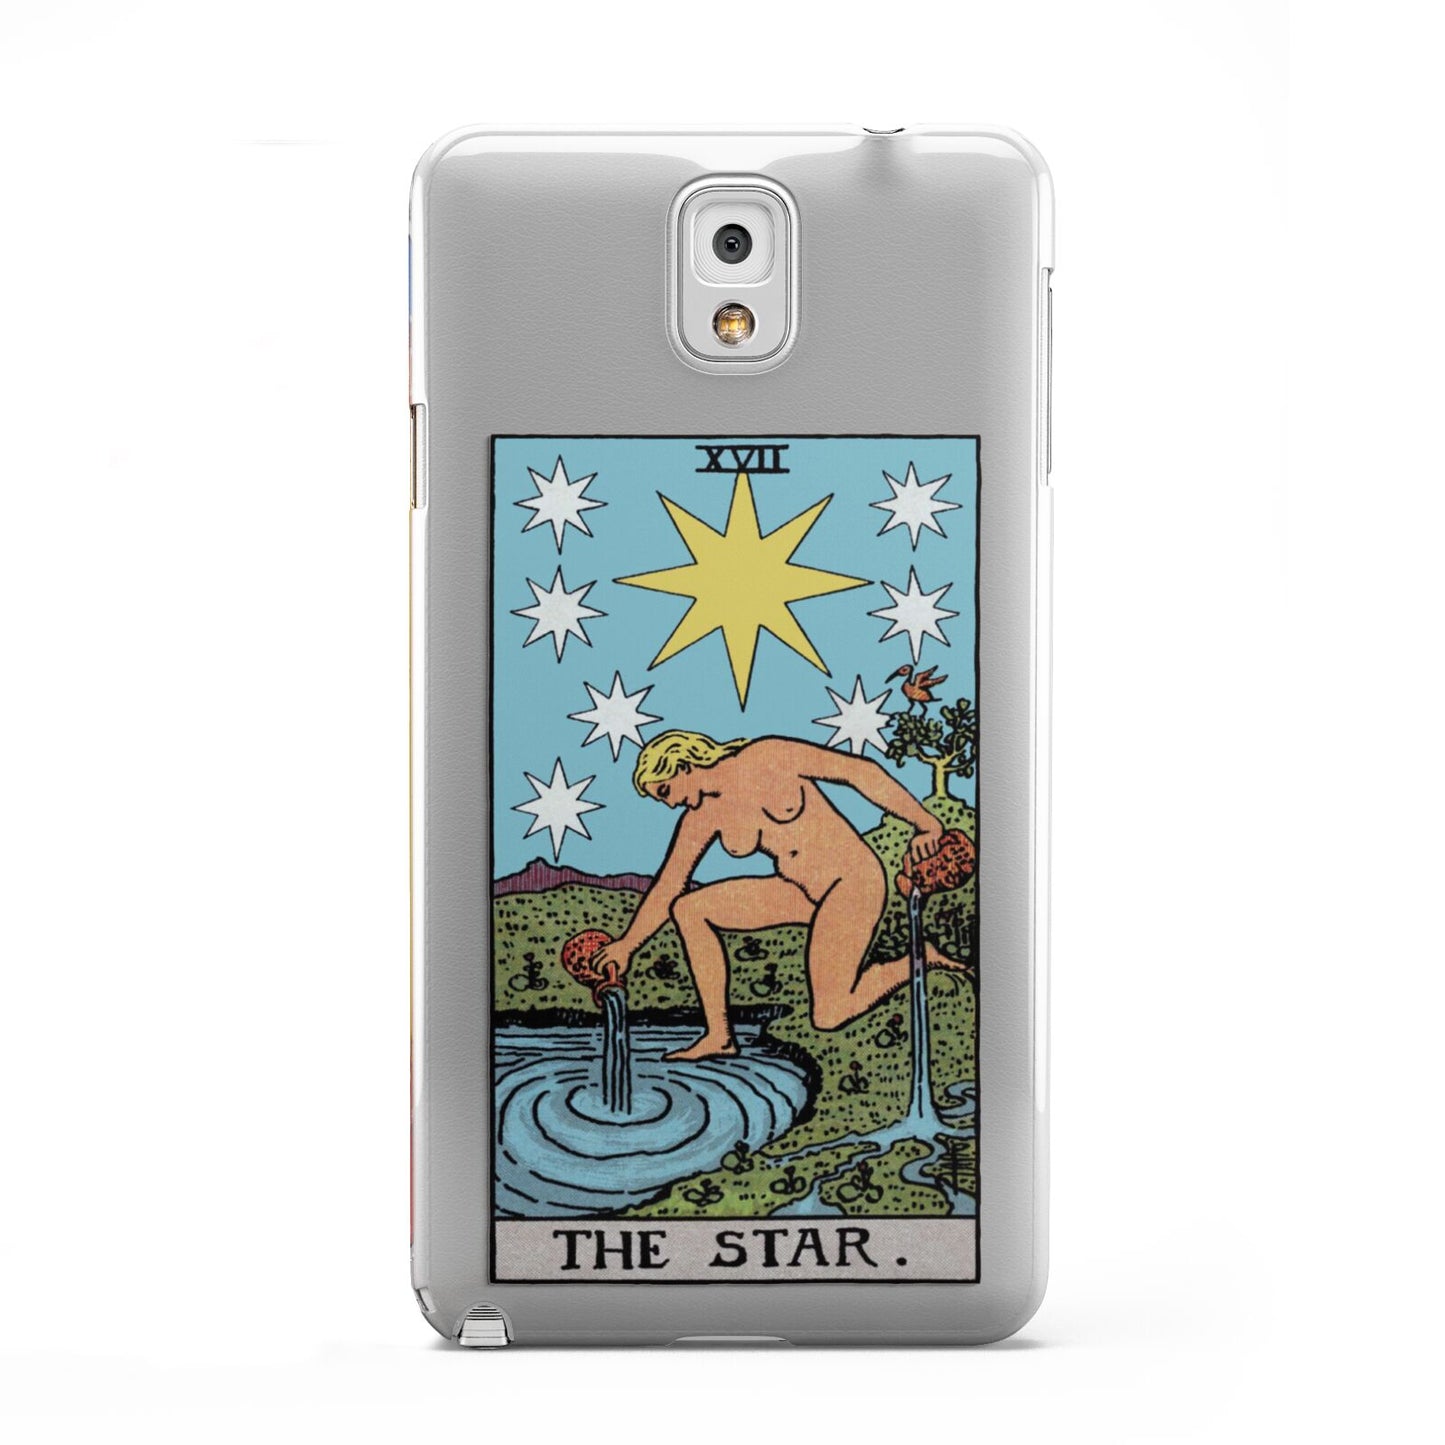 The Star Tarot Card Samsung Galaxy Note 3 Case